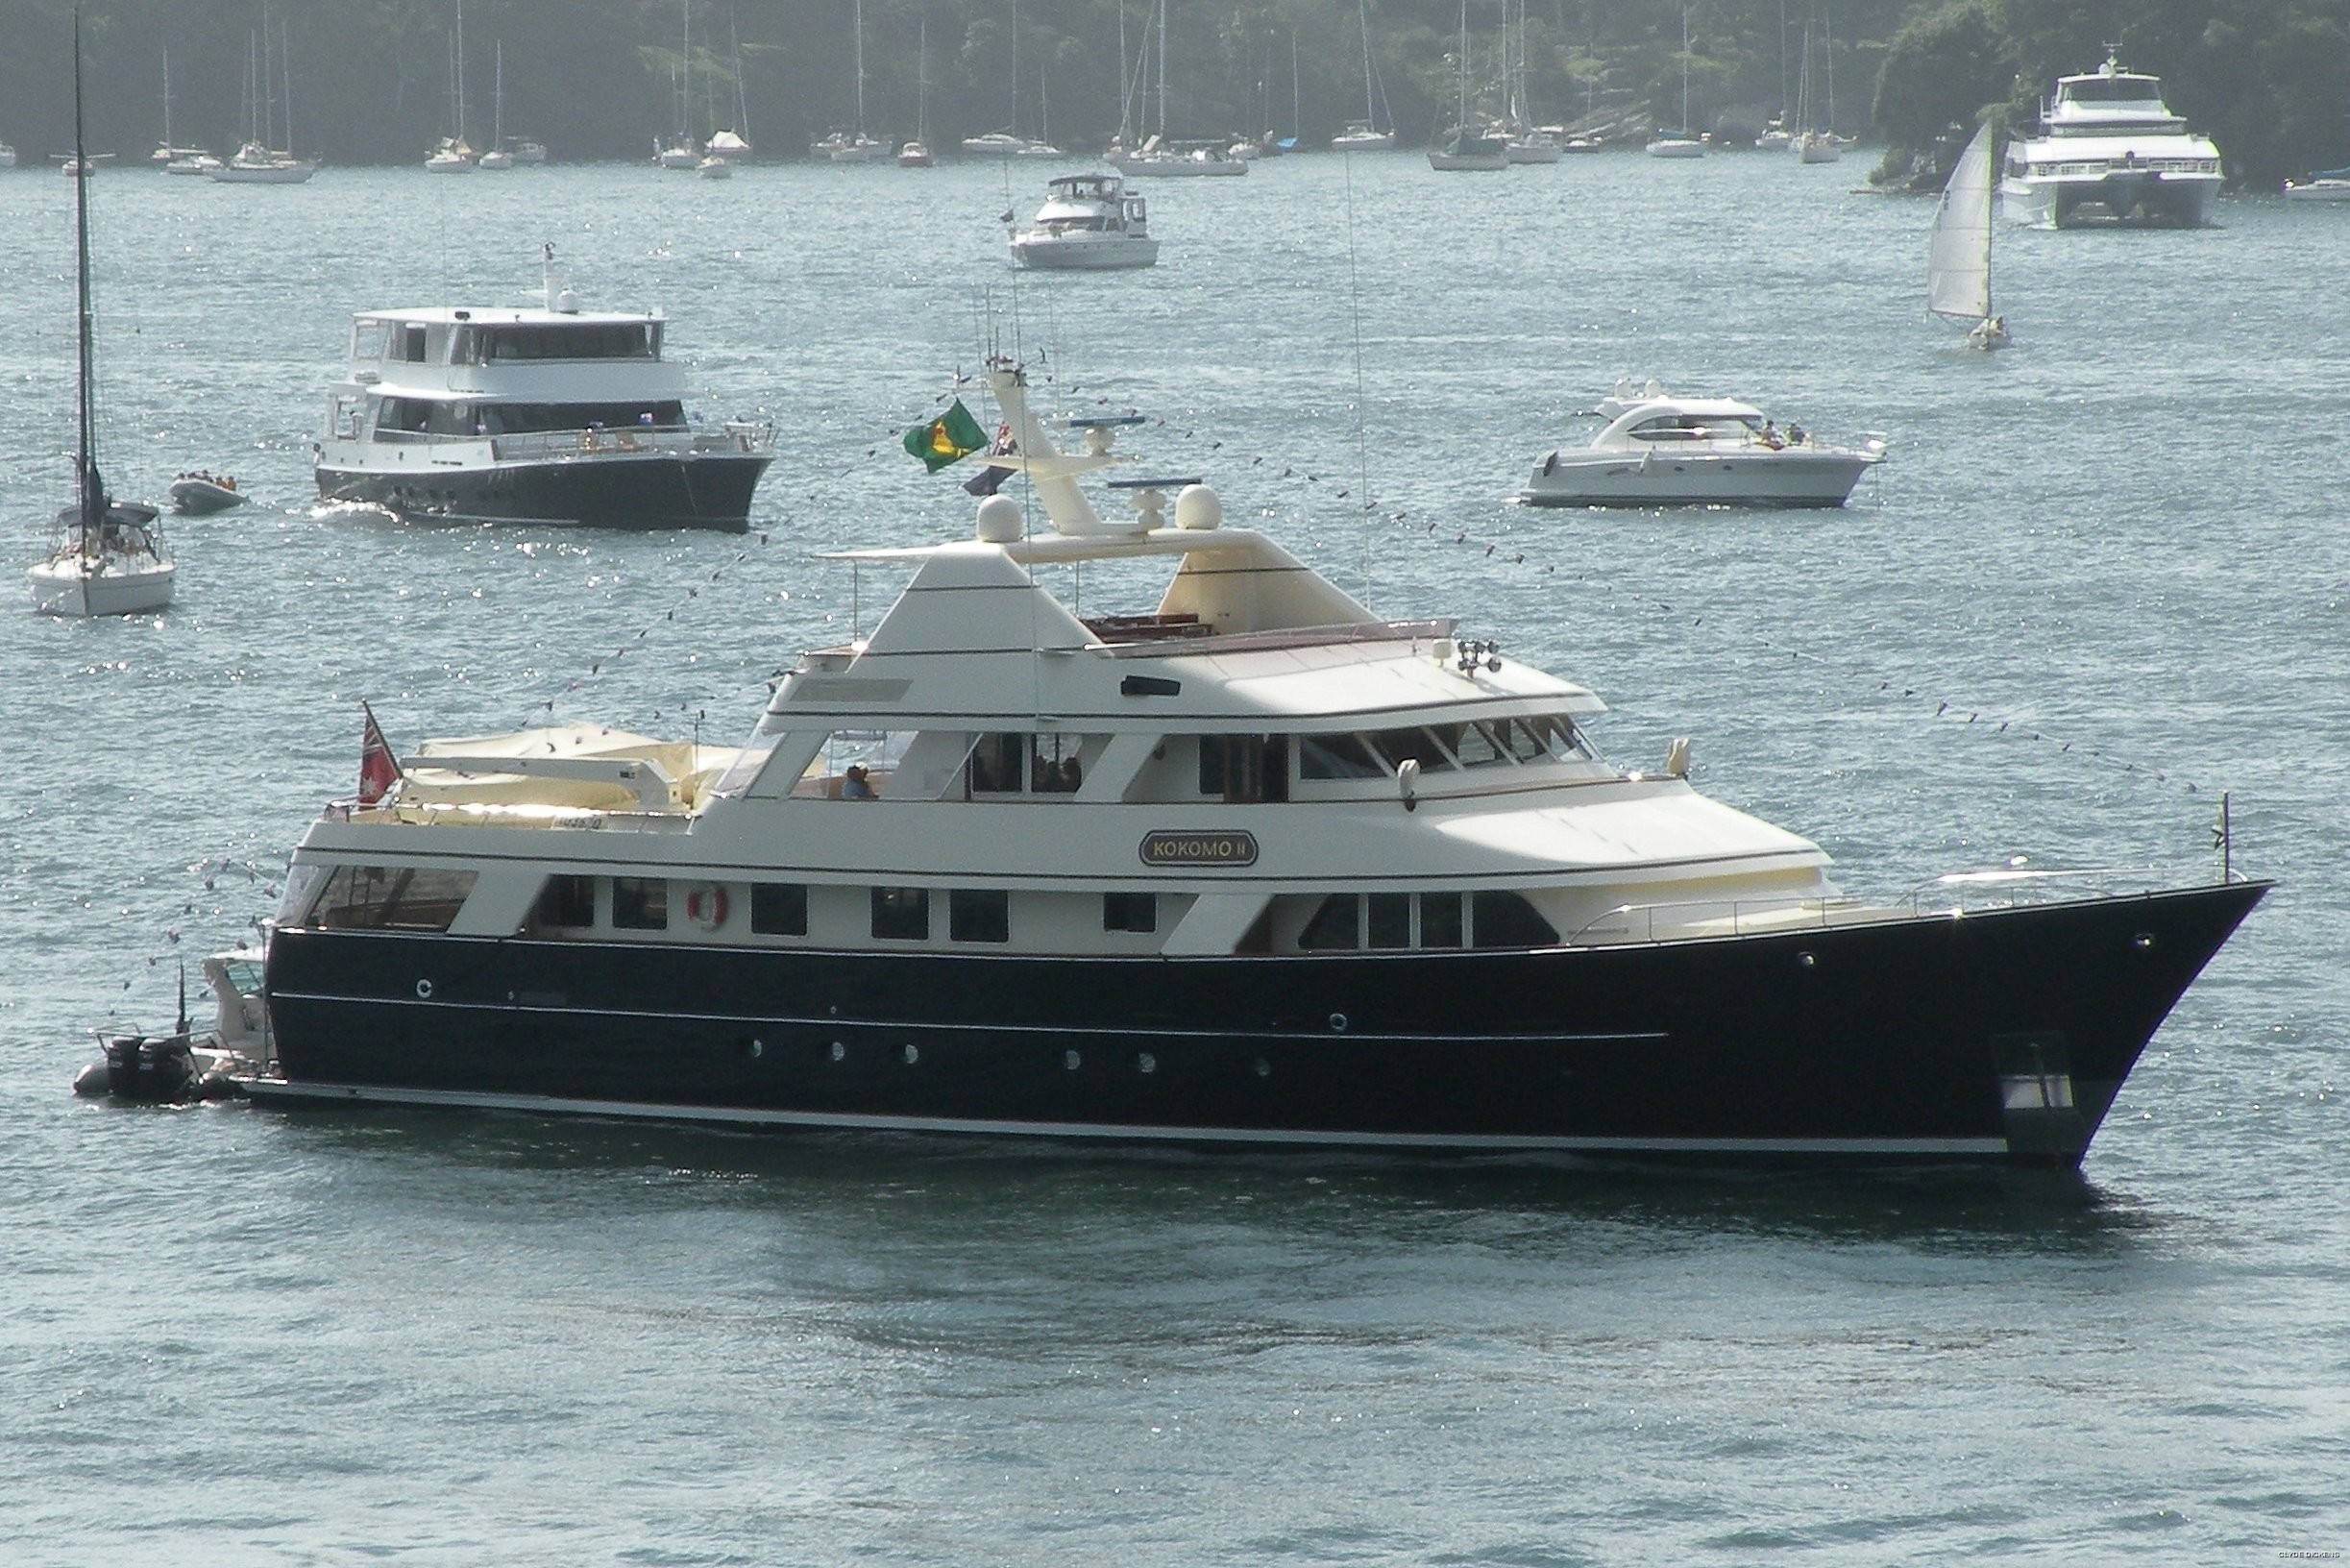 who owns kokomo yacht